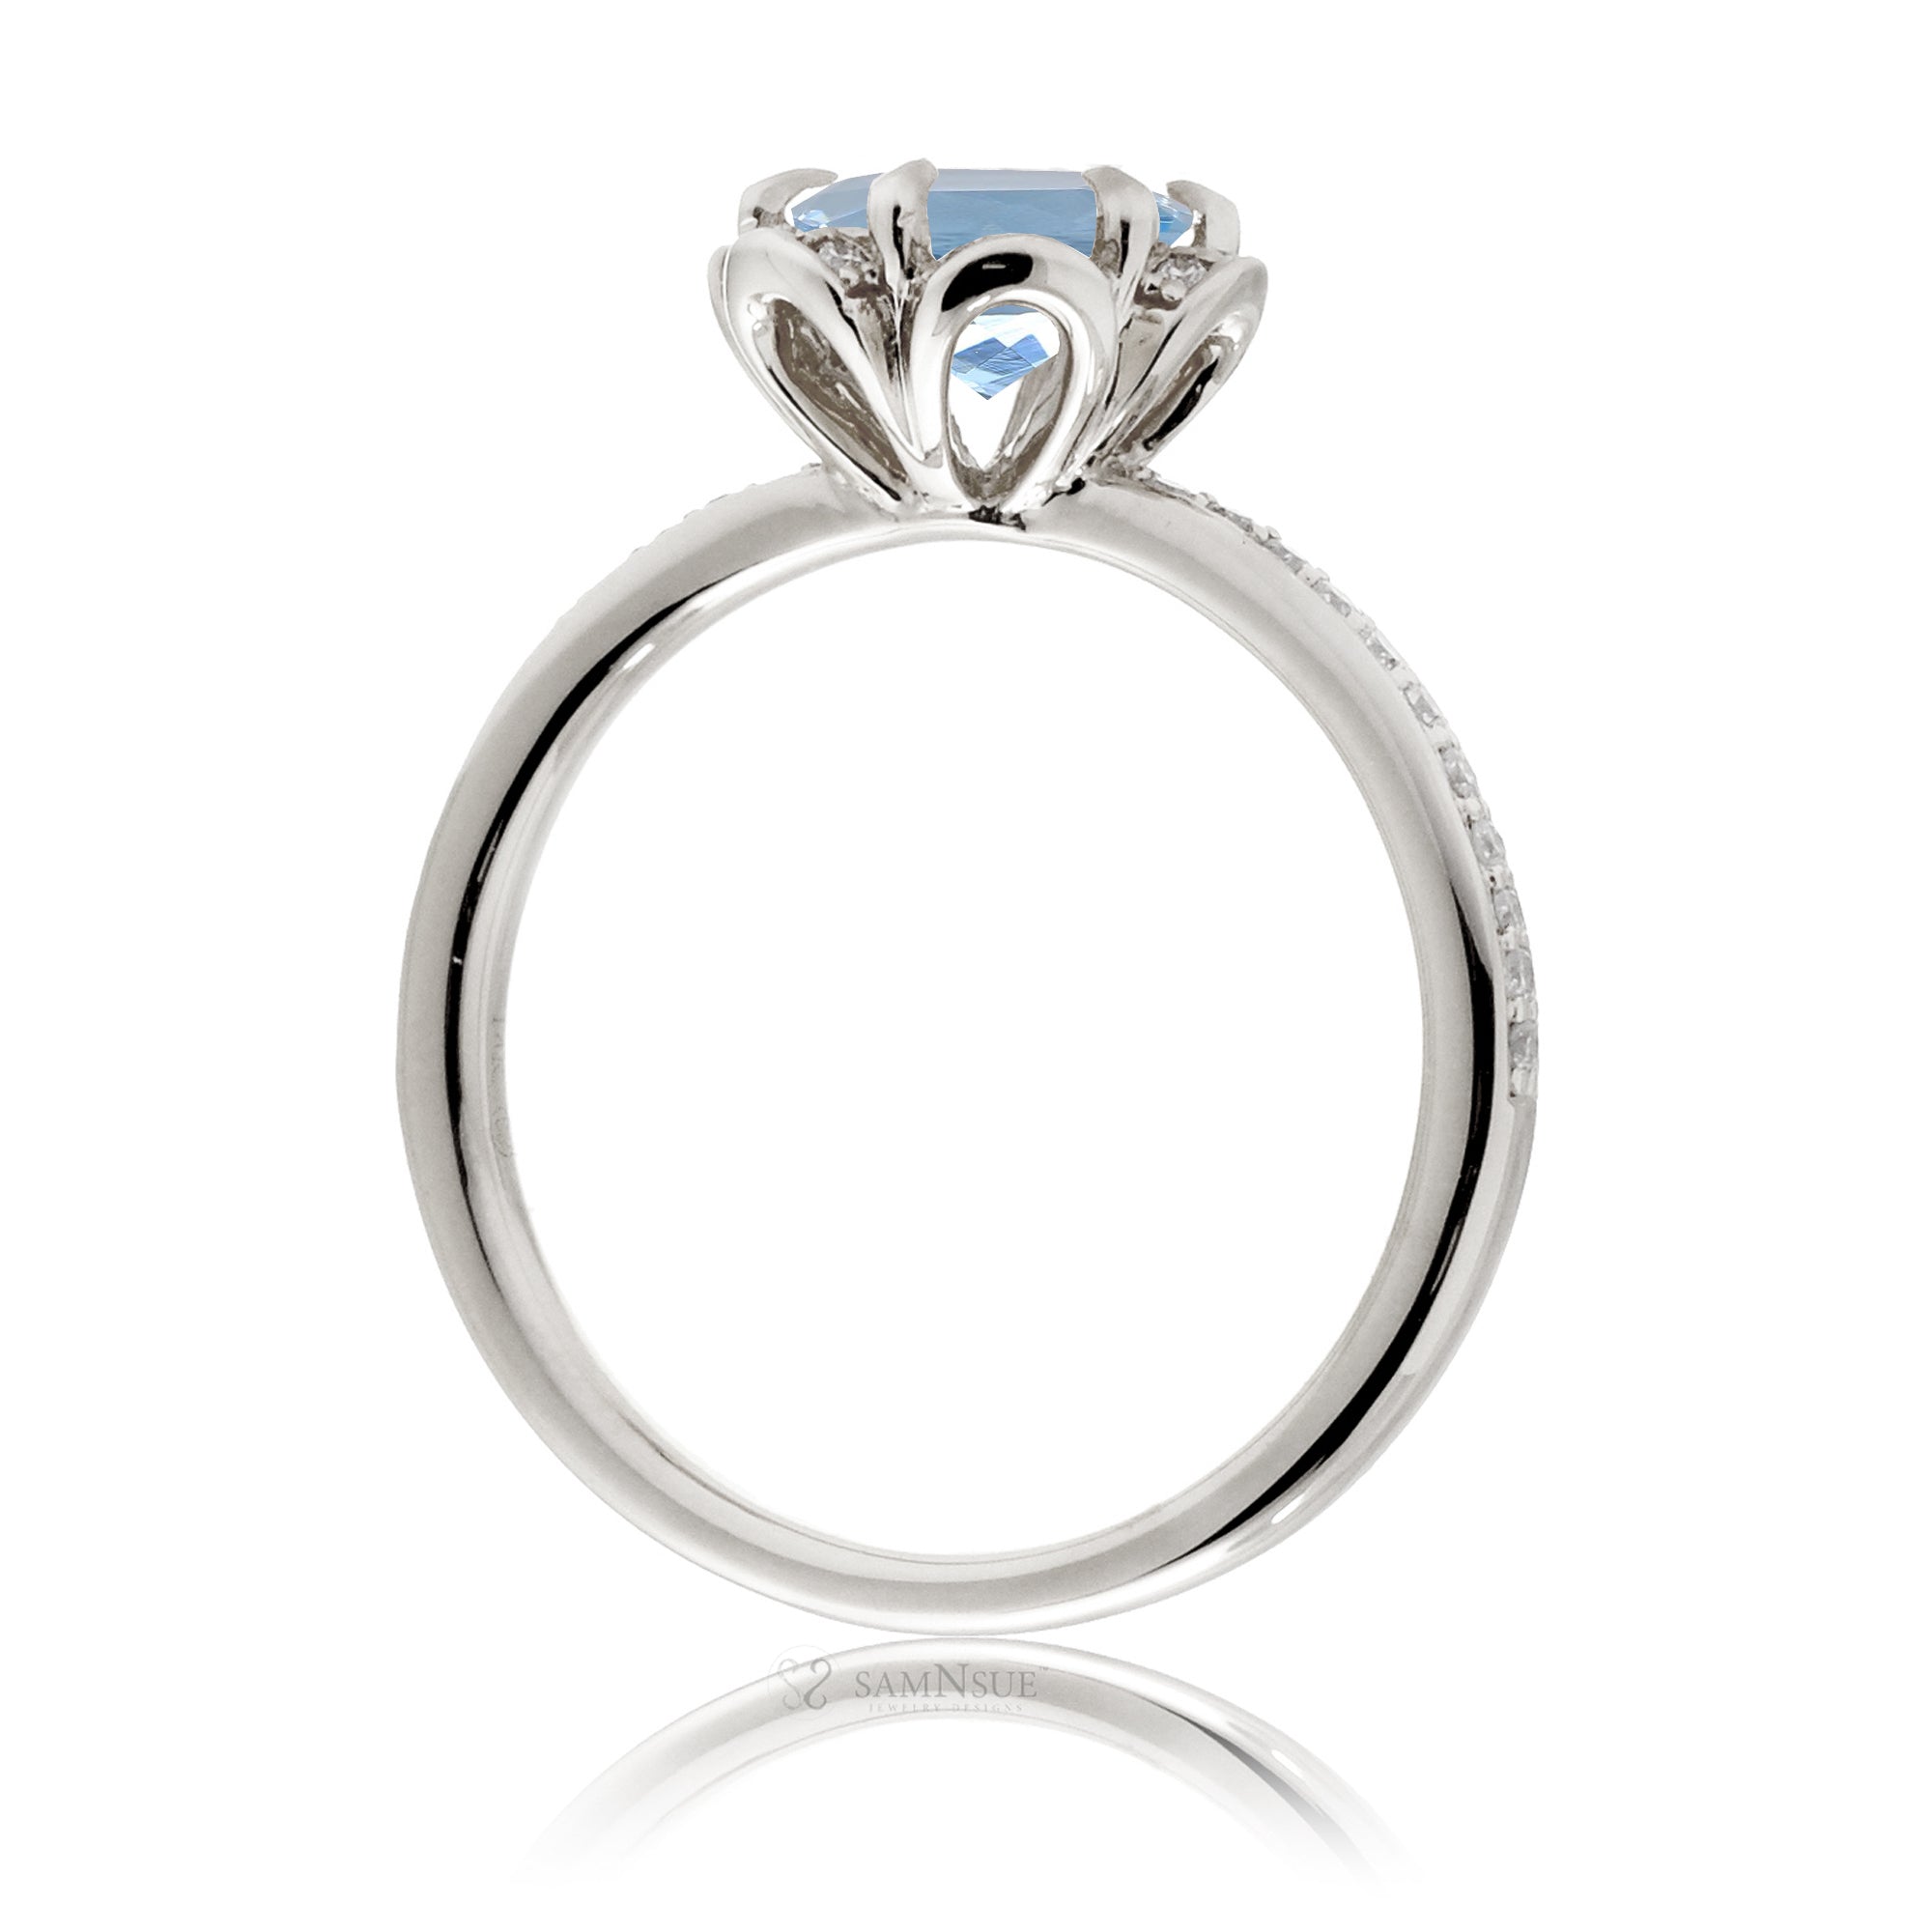 Aquamarine ring March birthstone diamond accent white gold